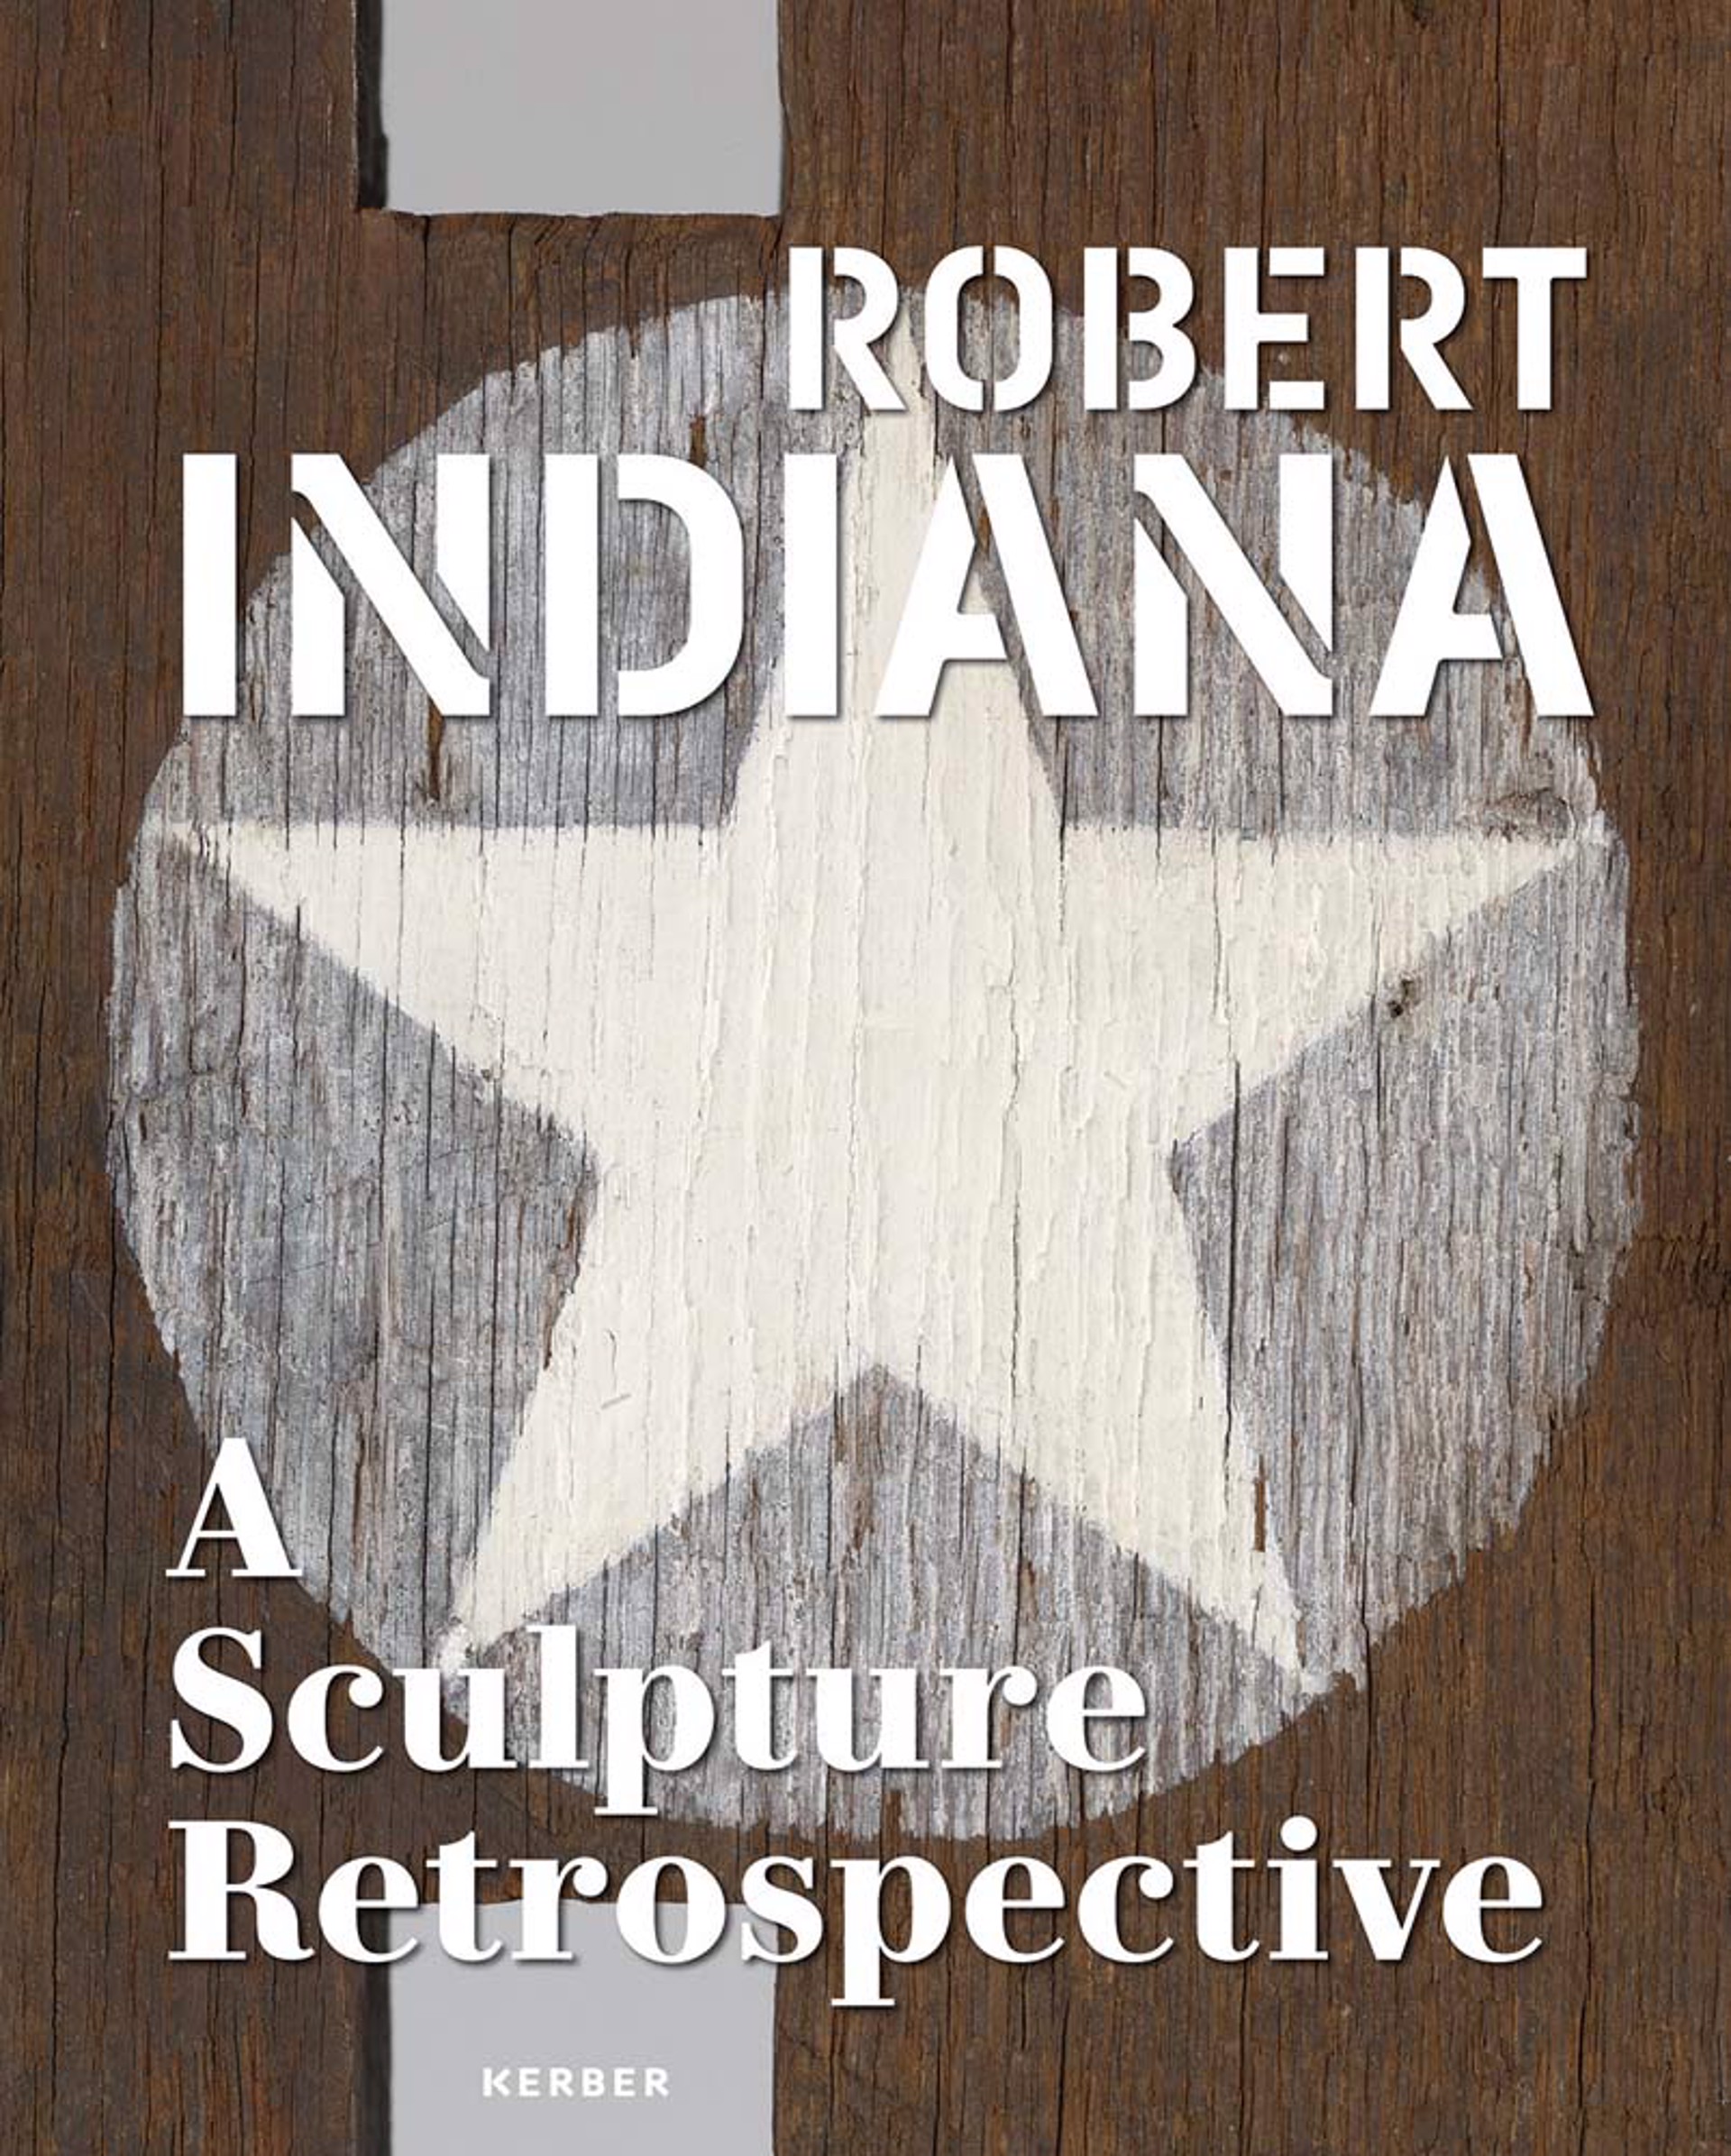 Robert Indiana: A Sculpture Retrospective by Robert Indiana